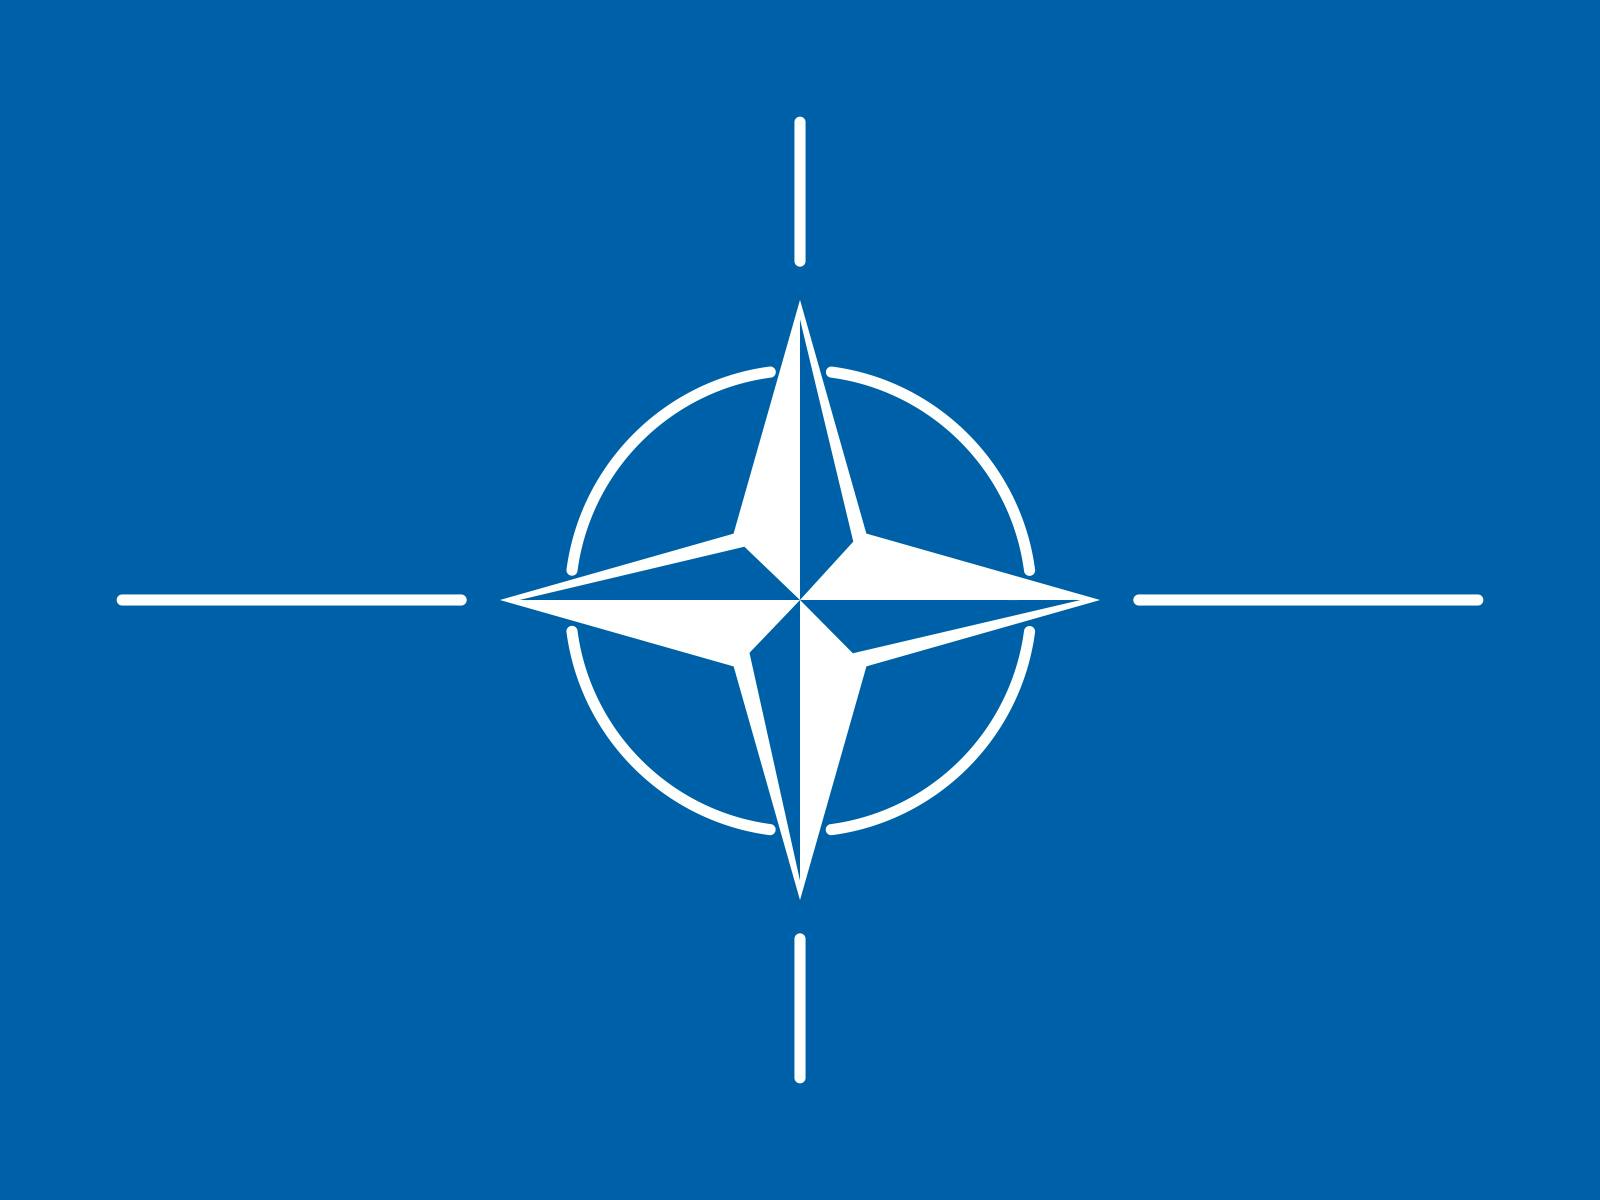 The flag of NATO 